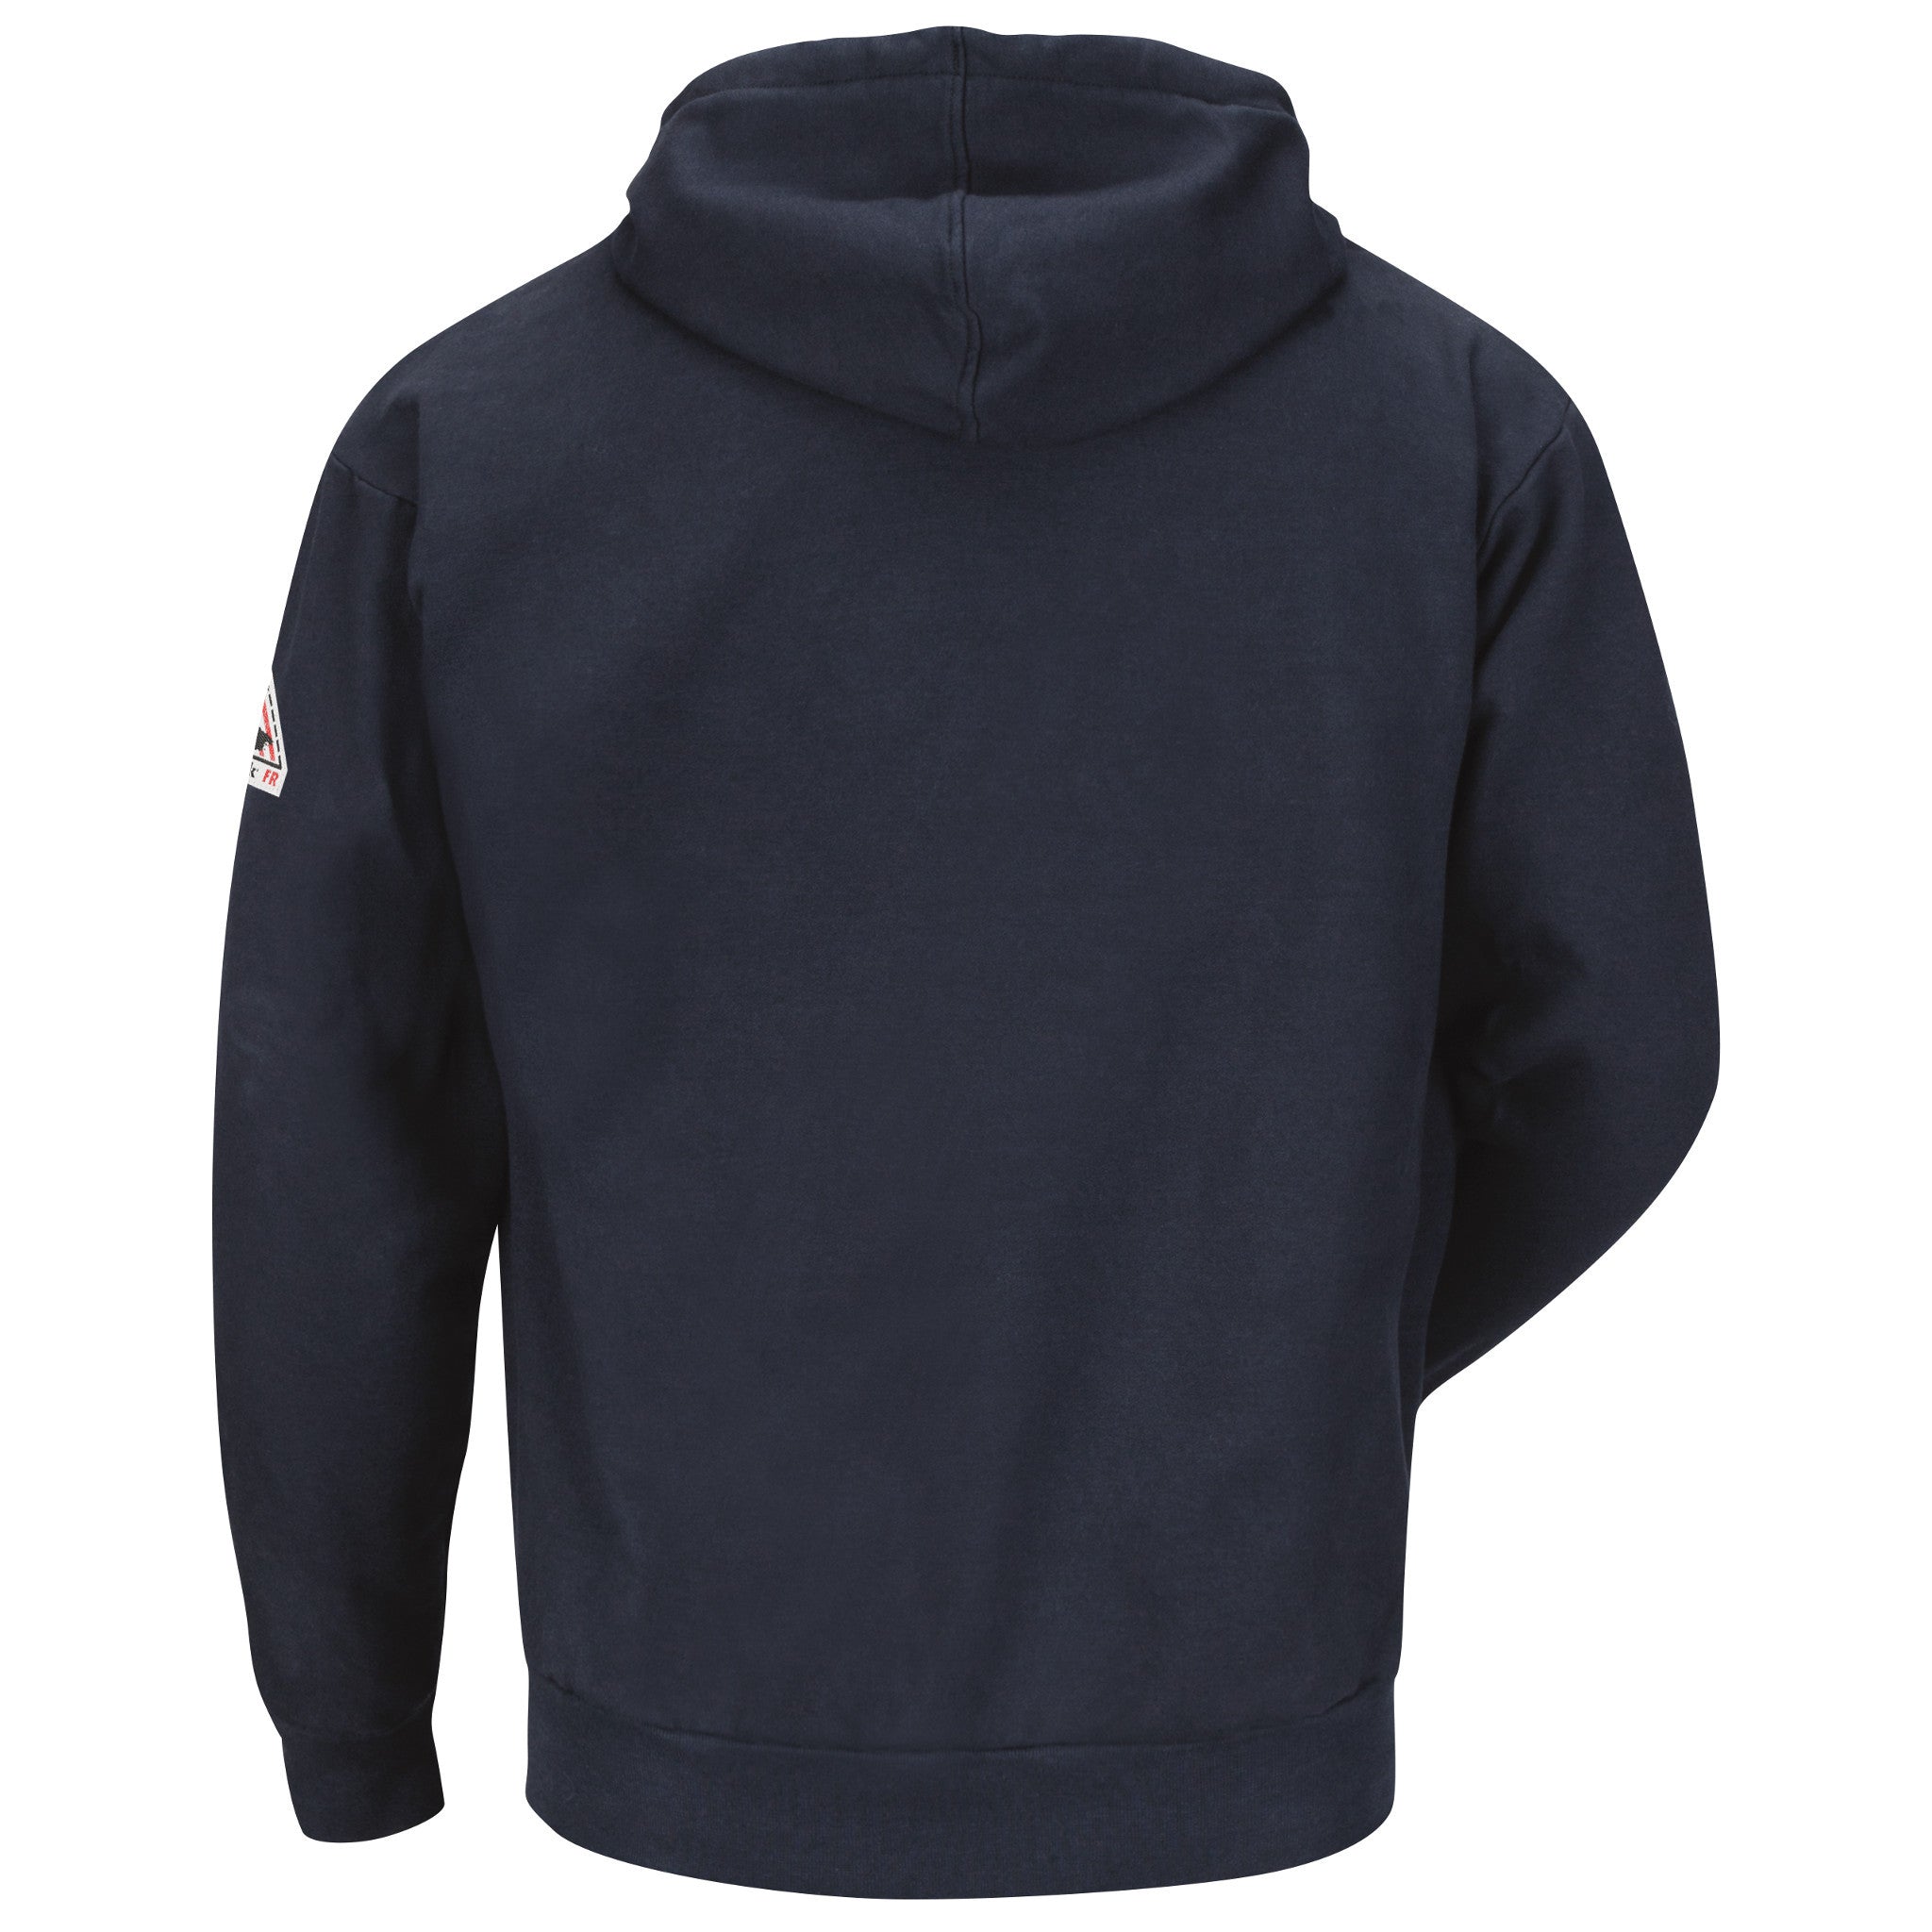 Bulwark Zip-Front Hooded Sweatshirt - Cotton/Spandex Blend - Cat 2 - (SEH4)